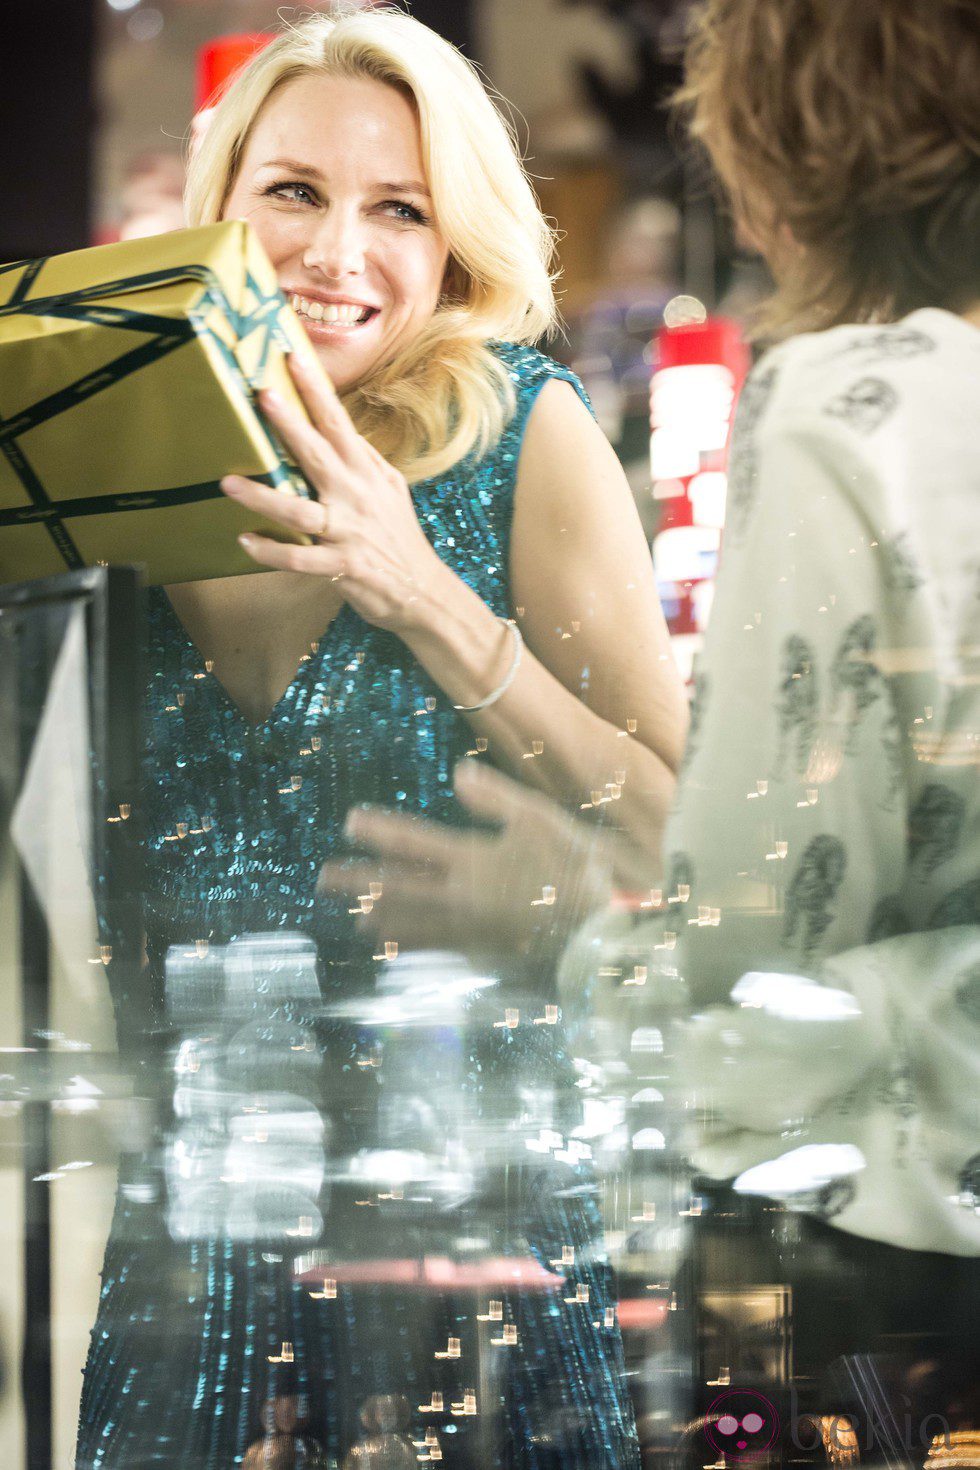 Naomi Watts protagoniza el spot de Navidad 2012 de El Corte Inglés